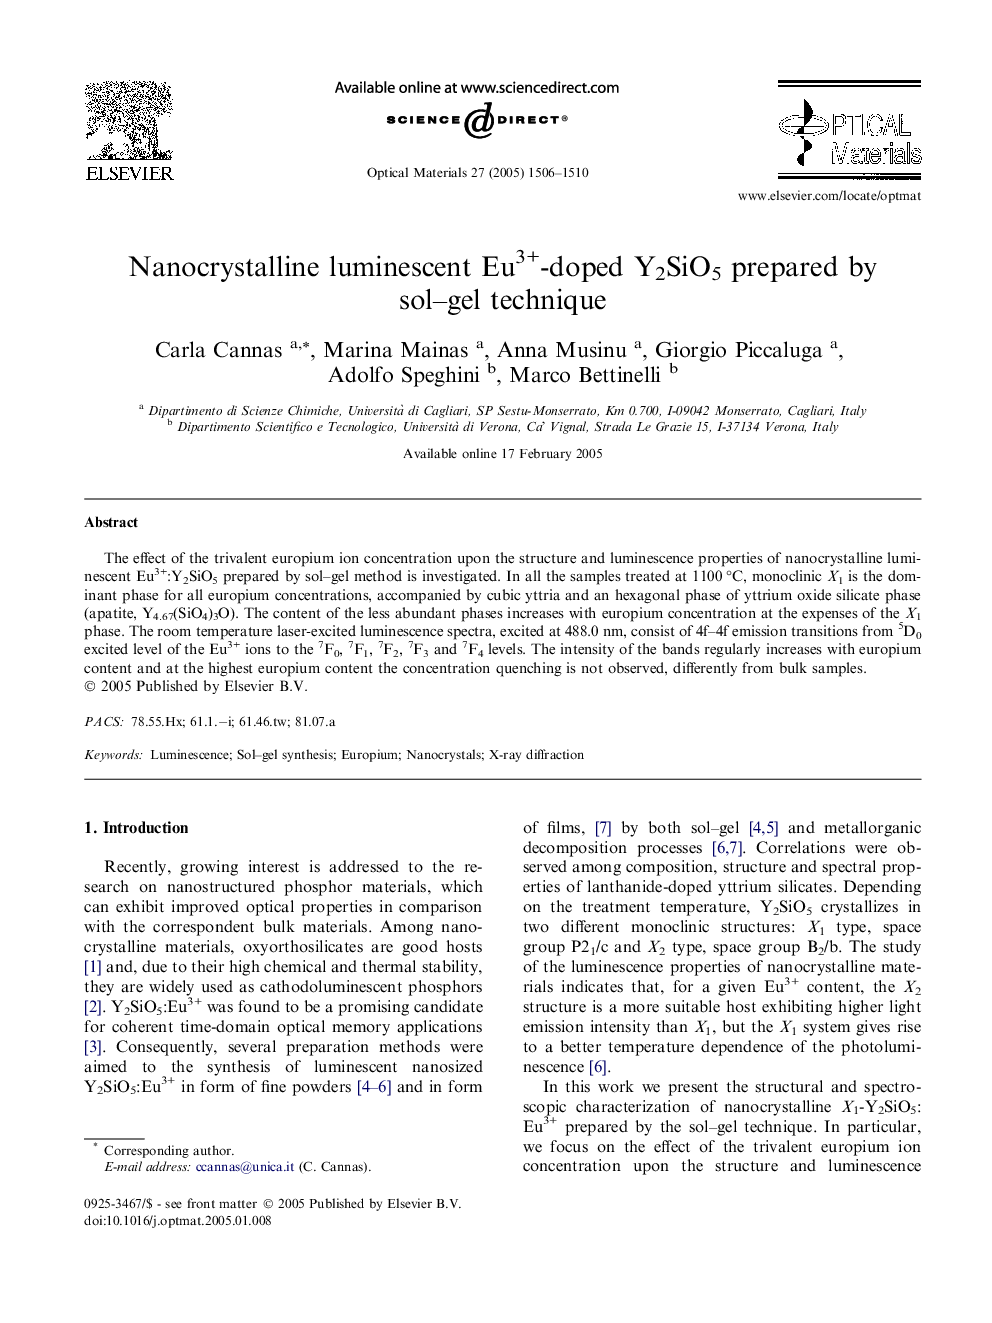 Nanocrystalline luminescent Eu3+-doped Y2SiO5 prepared by sol-gel technique